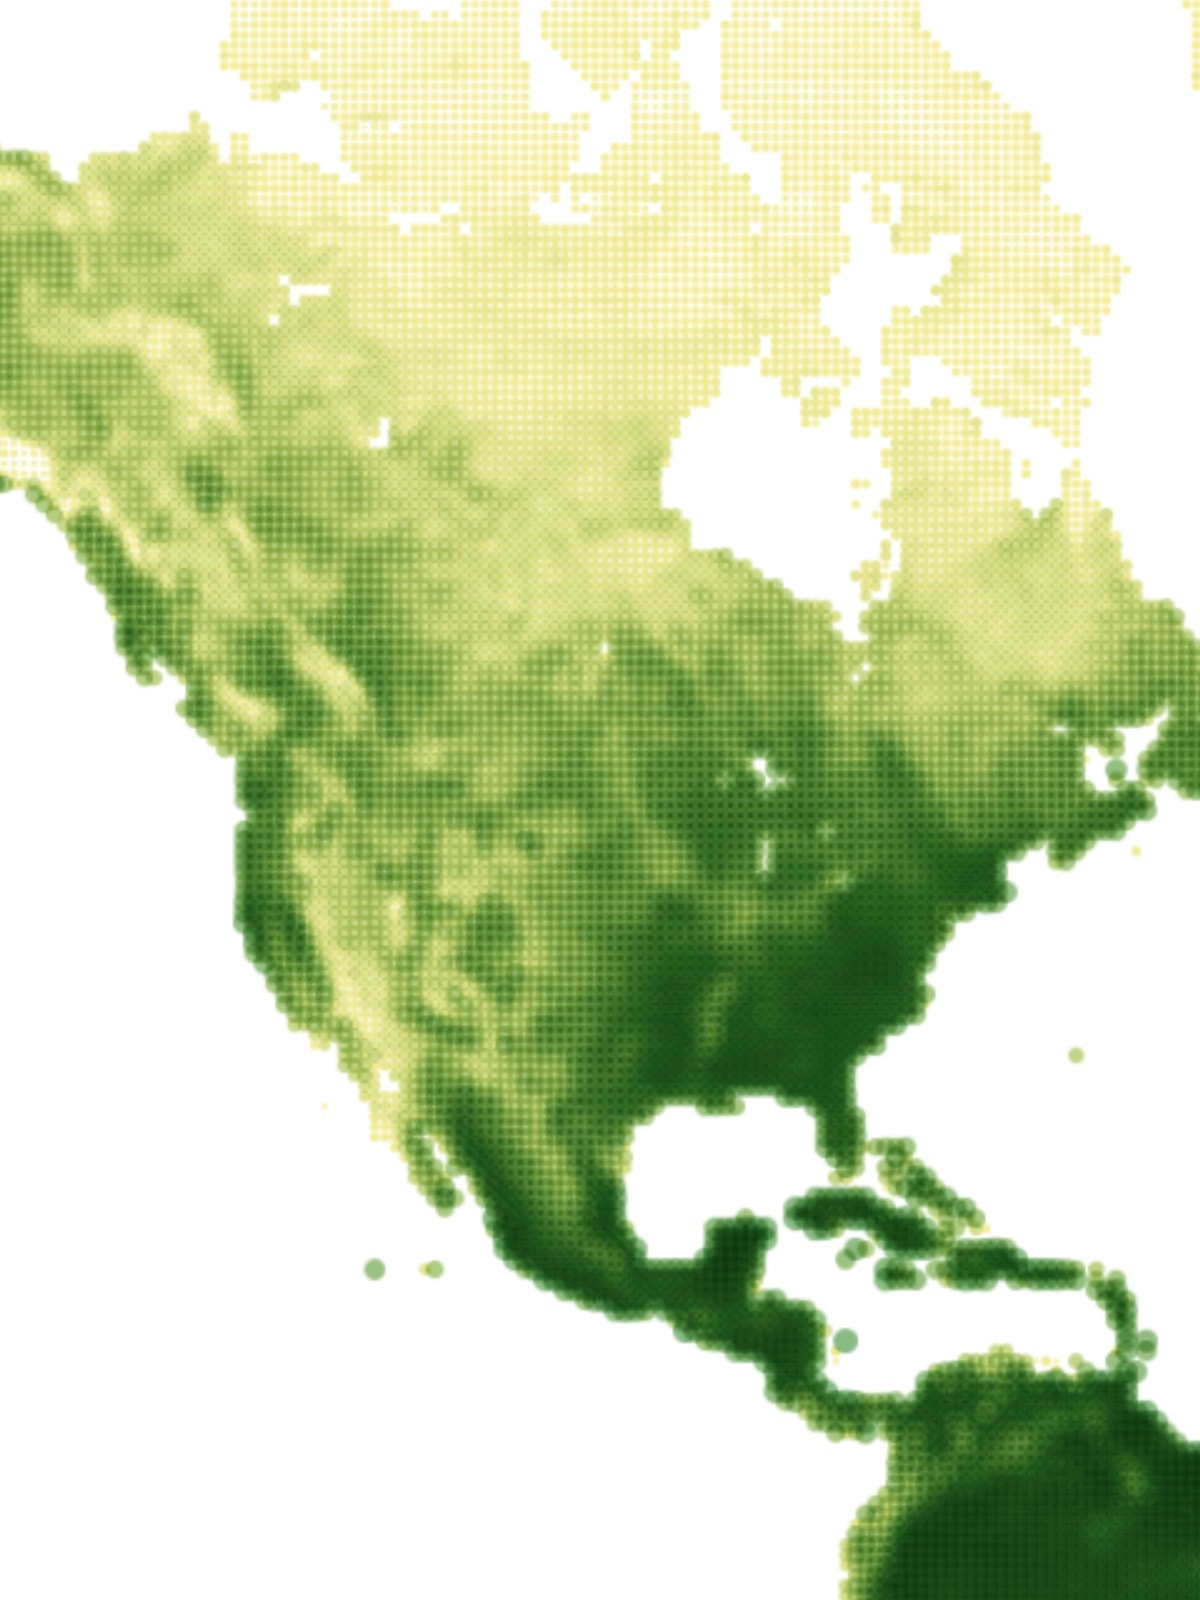 A close up of North America